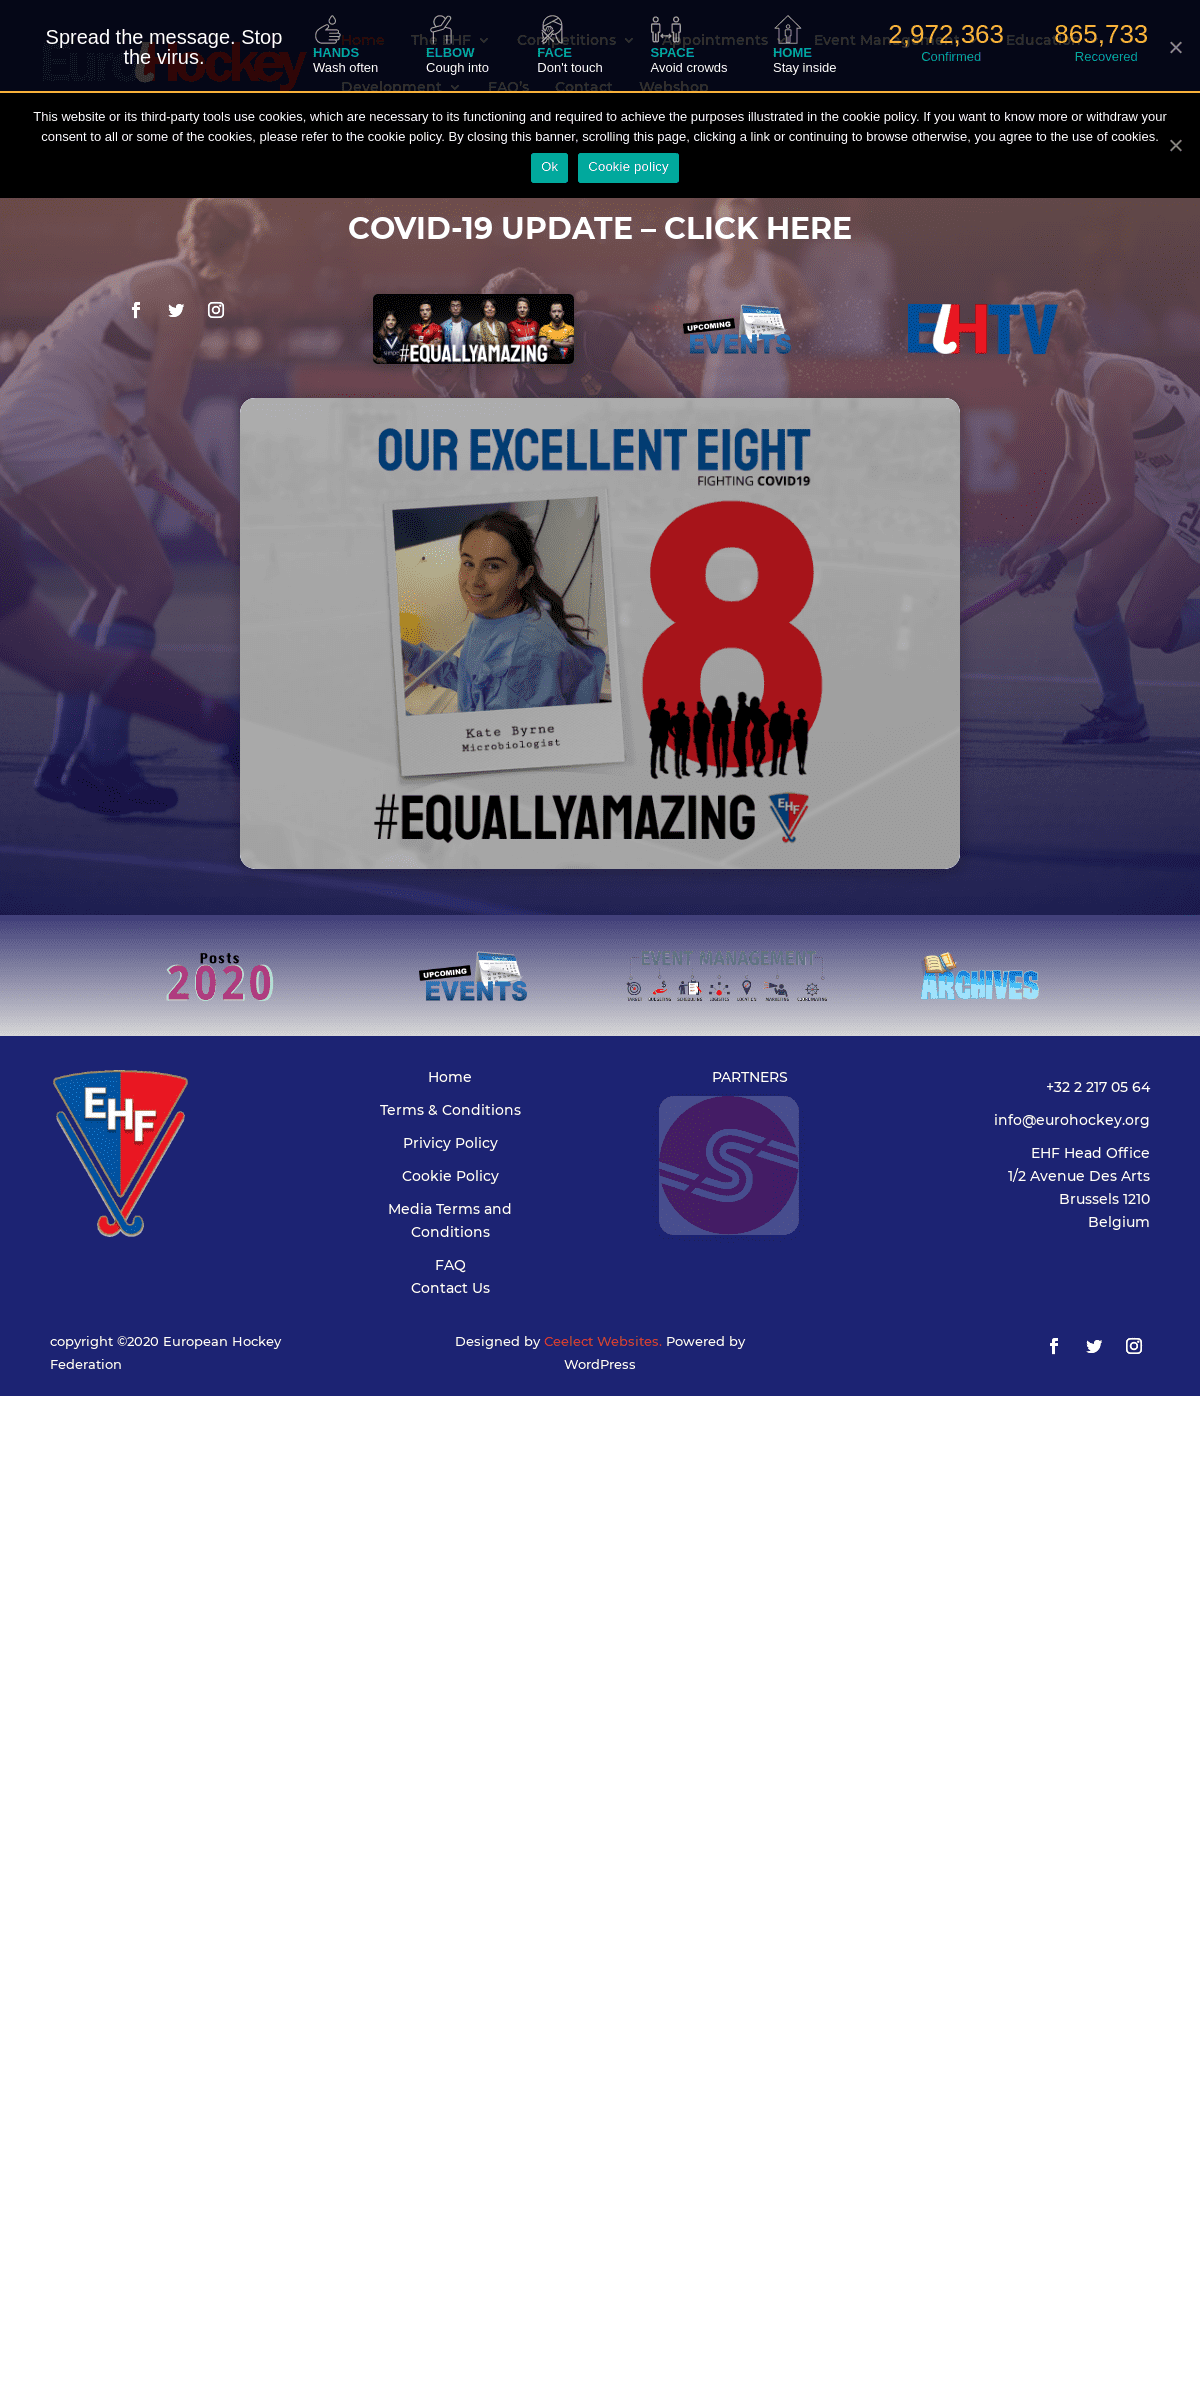 A complete backup of eurohockey.org